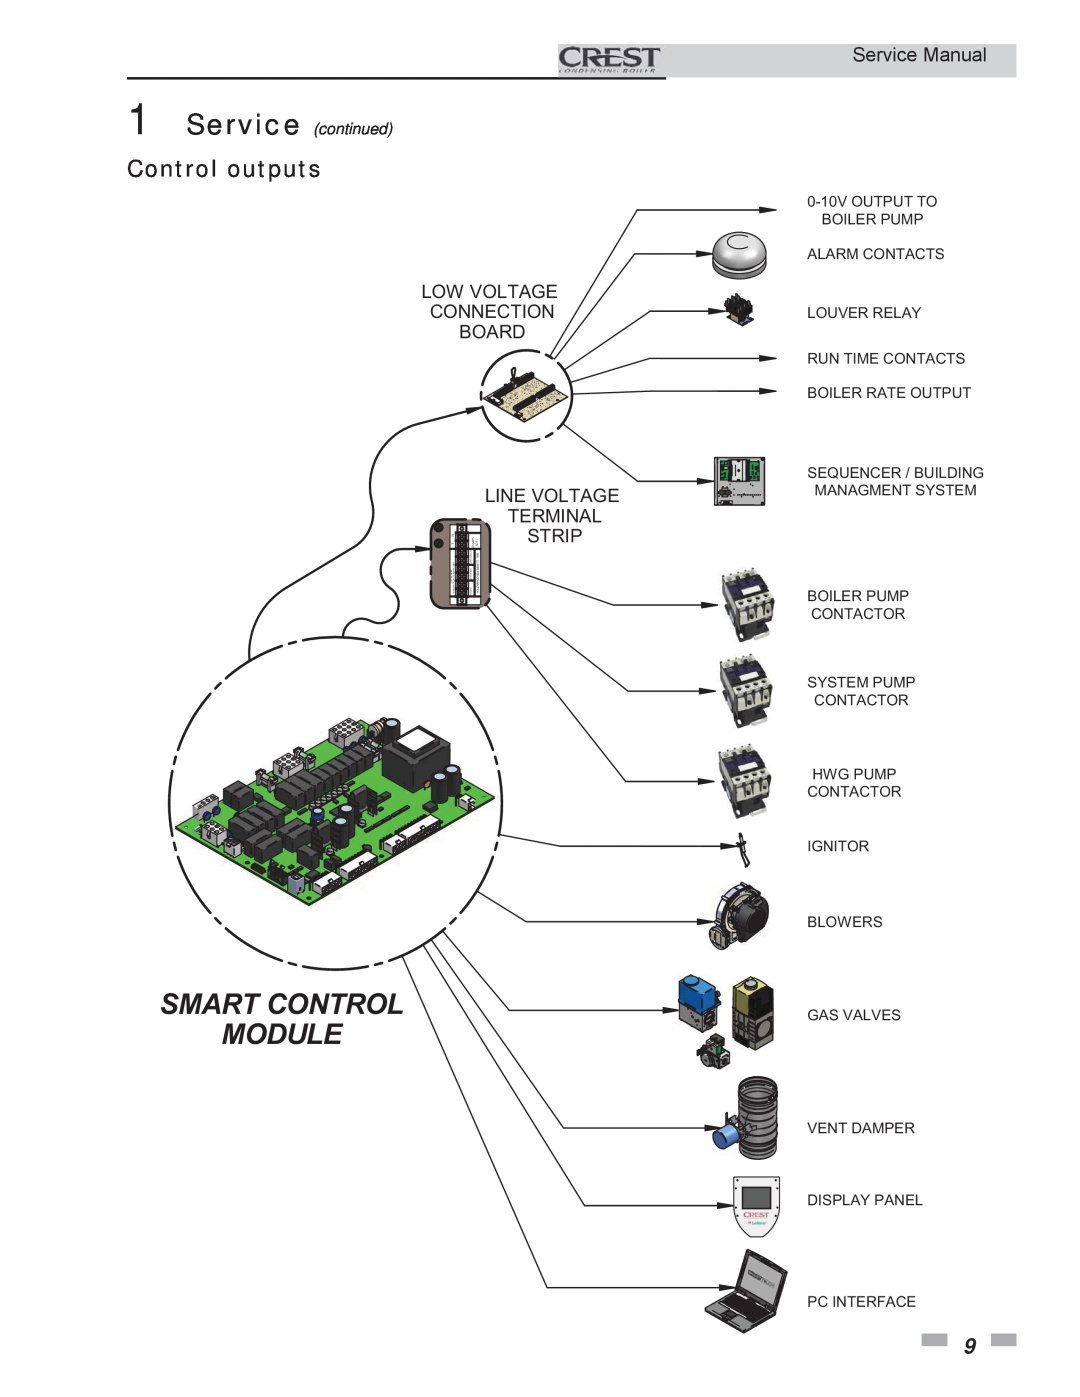 Lochinvar 2, 1.5, 3.5 Control outputs, Smart Control Module, Low Voltage Connection Board, Line Voltage, Terminal, Strip 